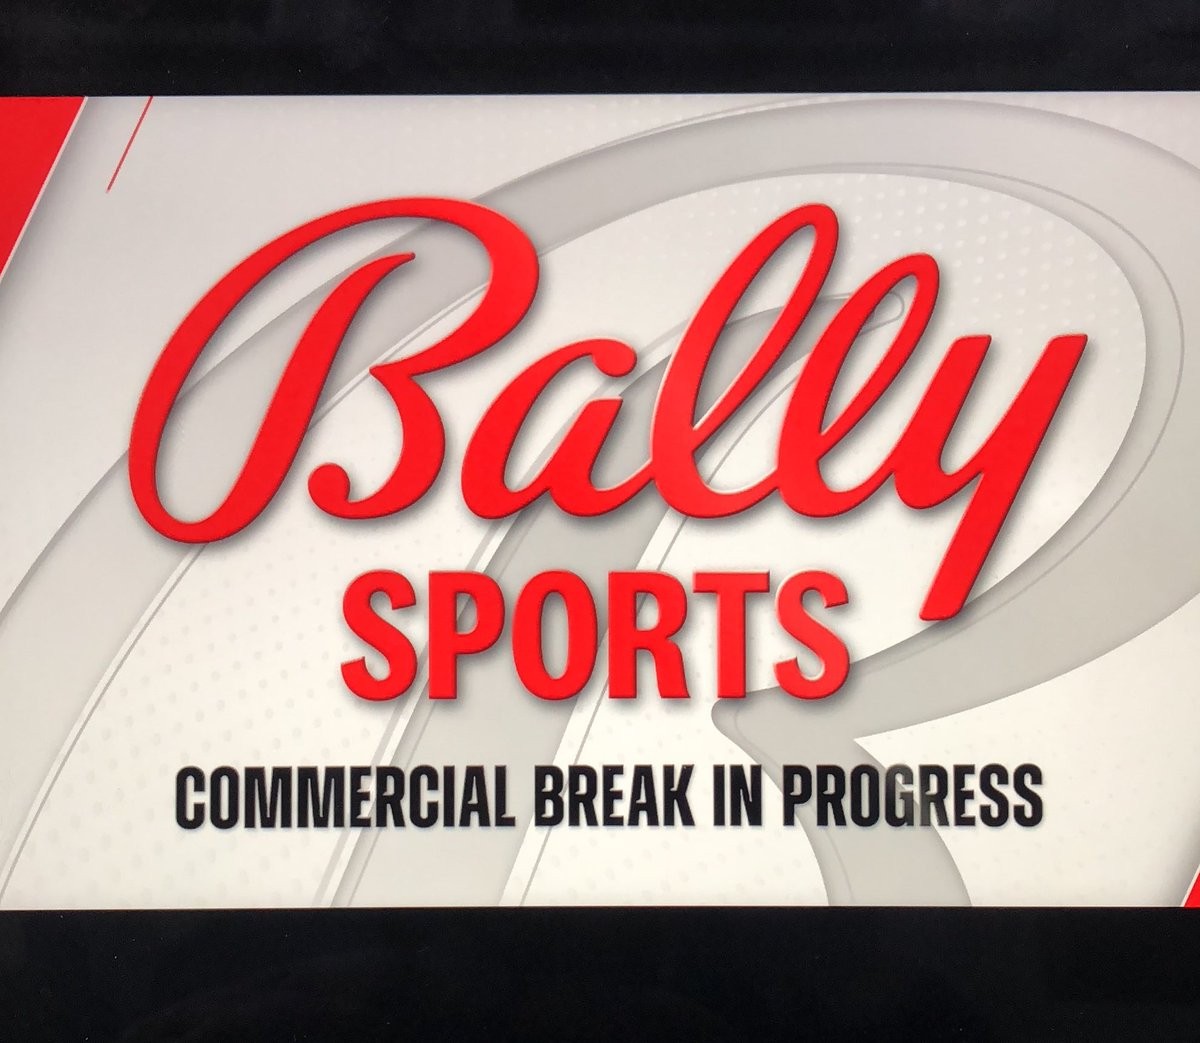 bally sports ohio streaming